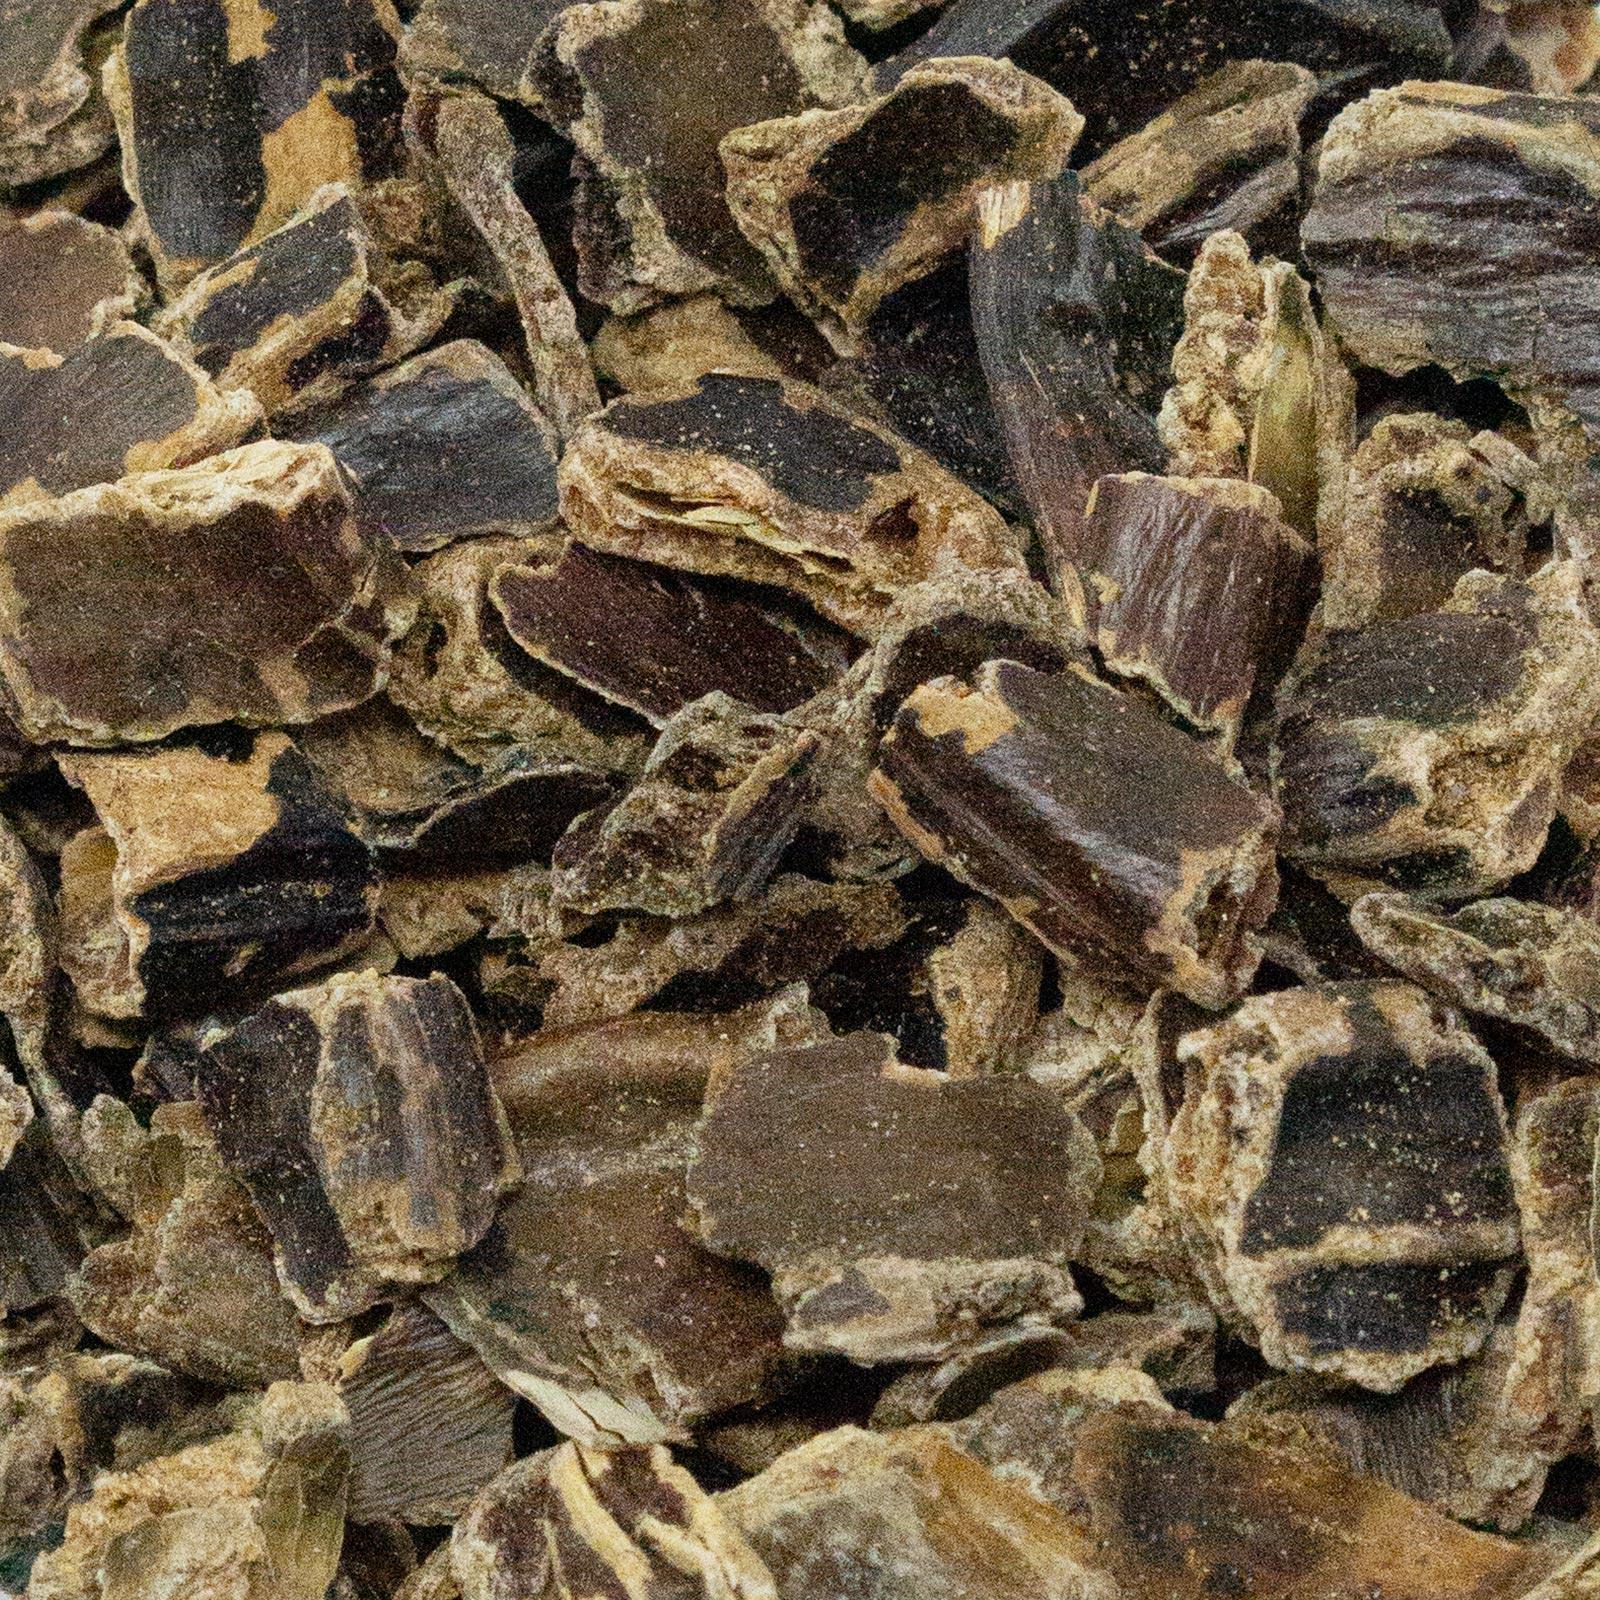 Leimüller Locust Bean 20 kg